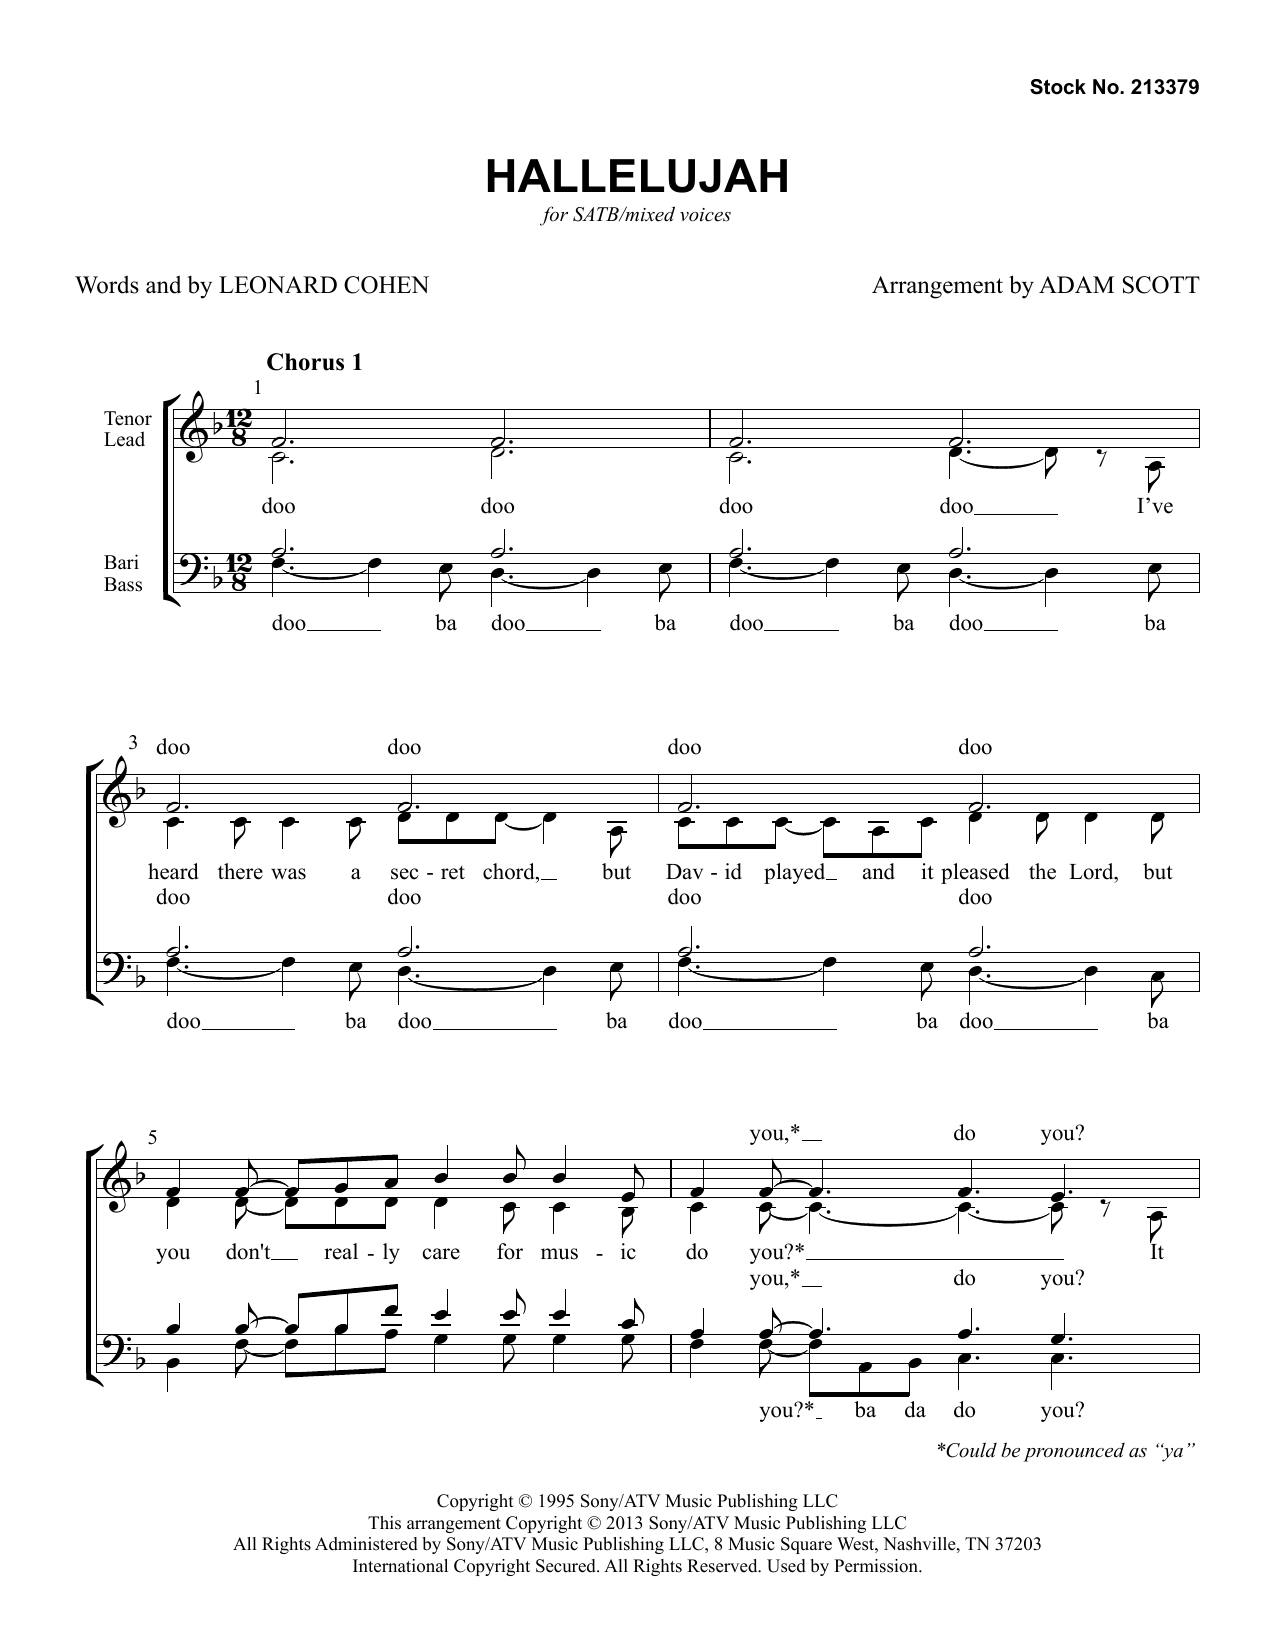 Download John Cale Hallelujah (arr. Adam Scott) Sheet Music and learn how to play TTBB Choir PDF digital score in minutes